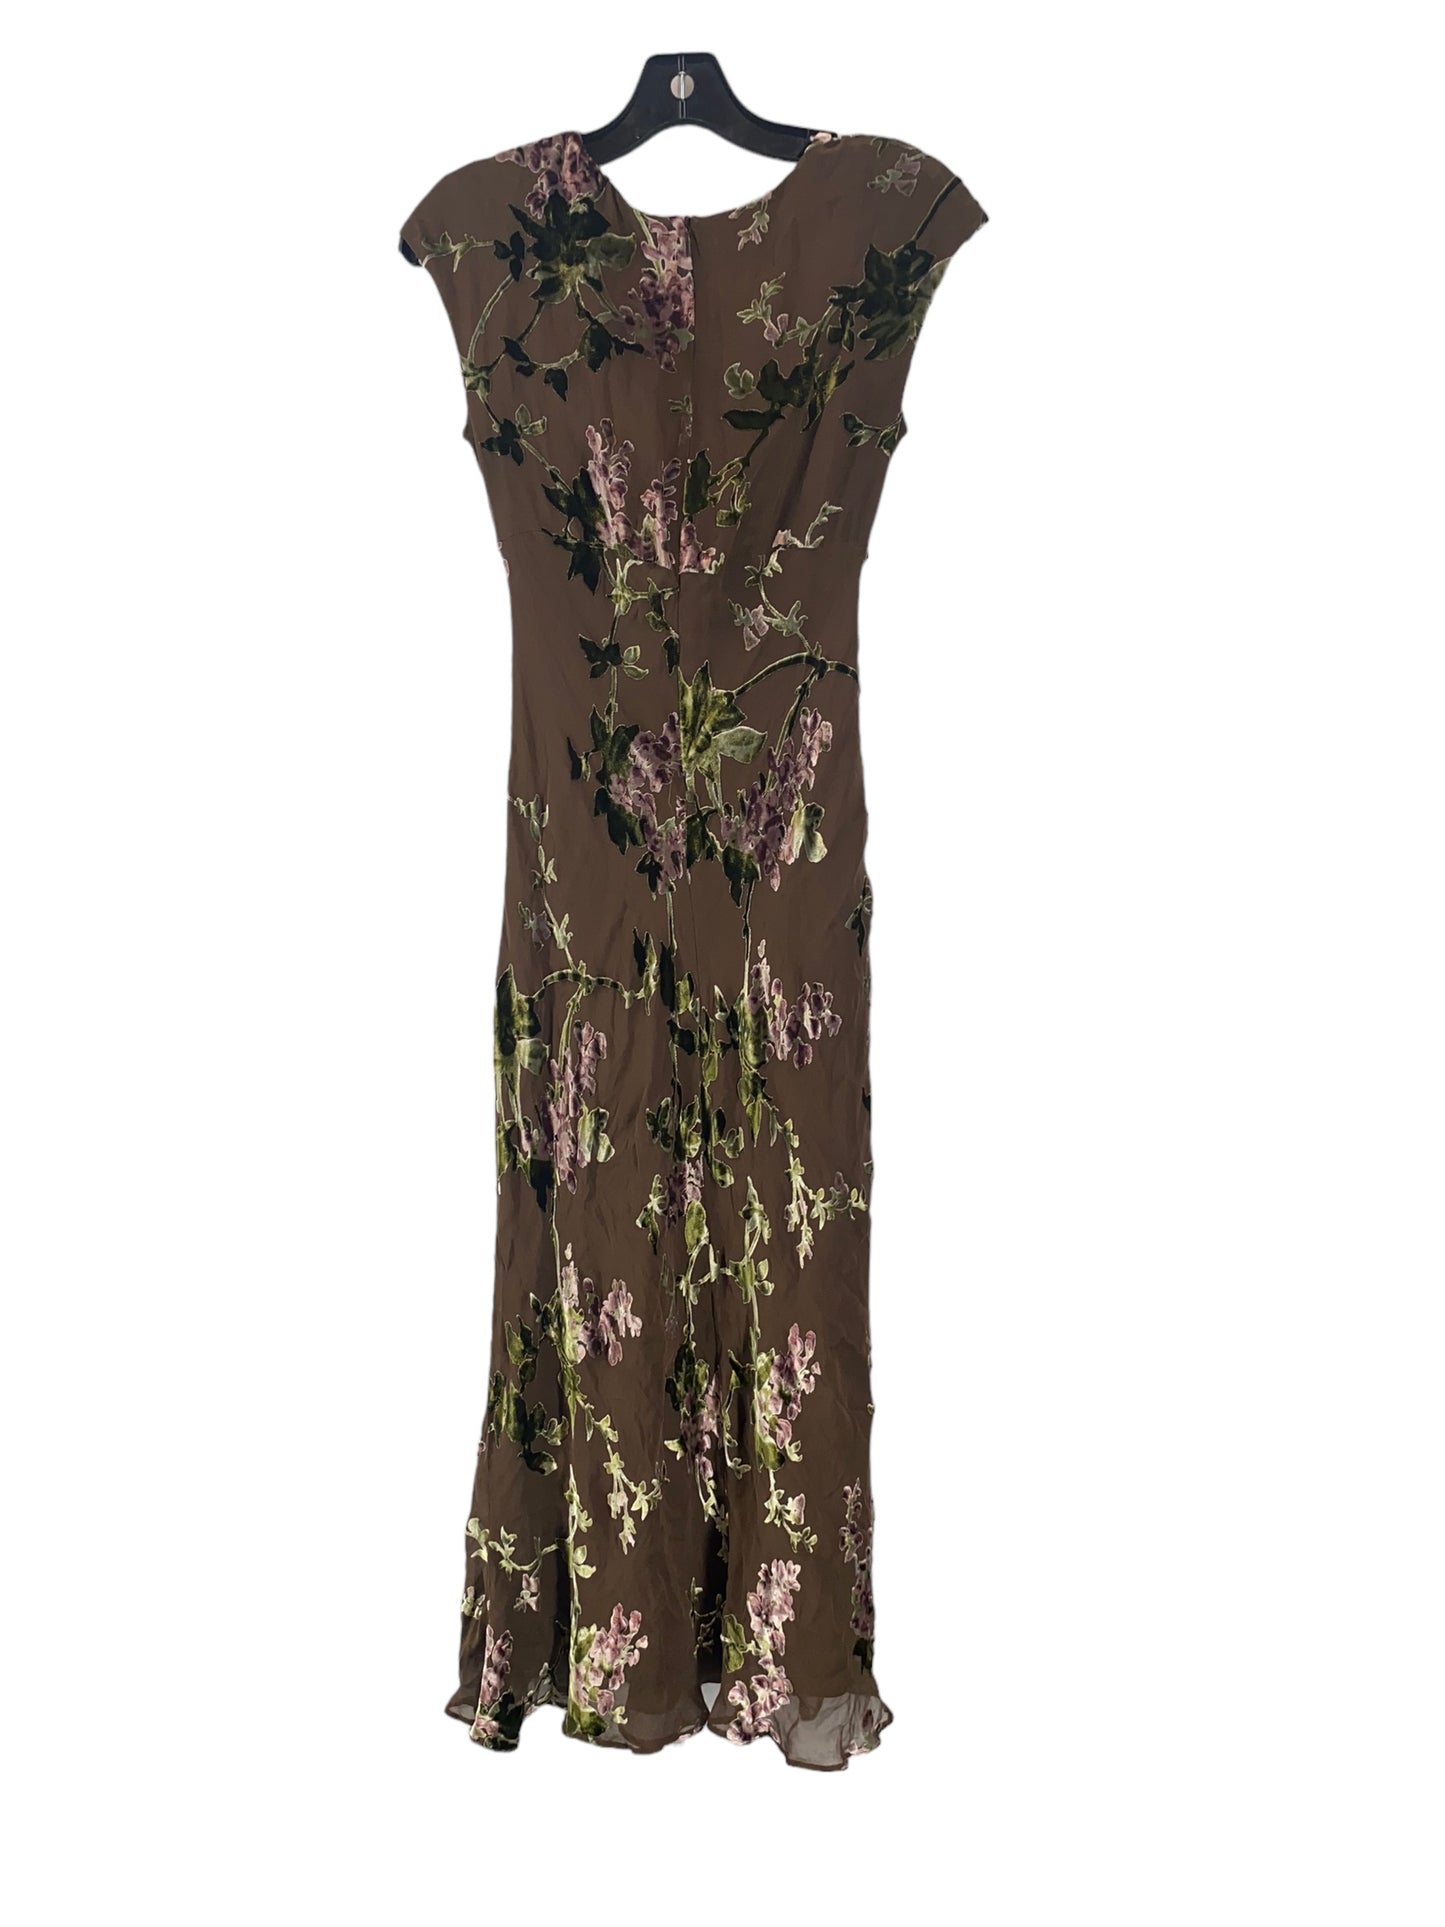 Dress Casual Maxi By Jones New York  Size: 4